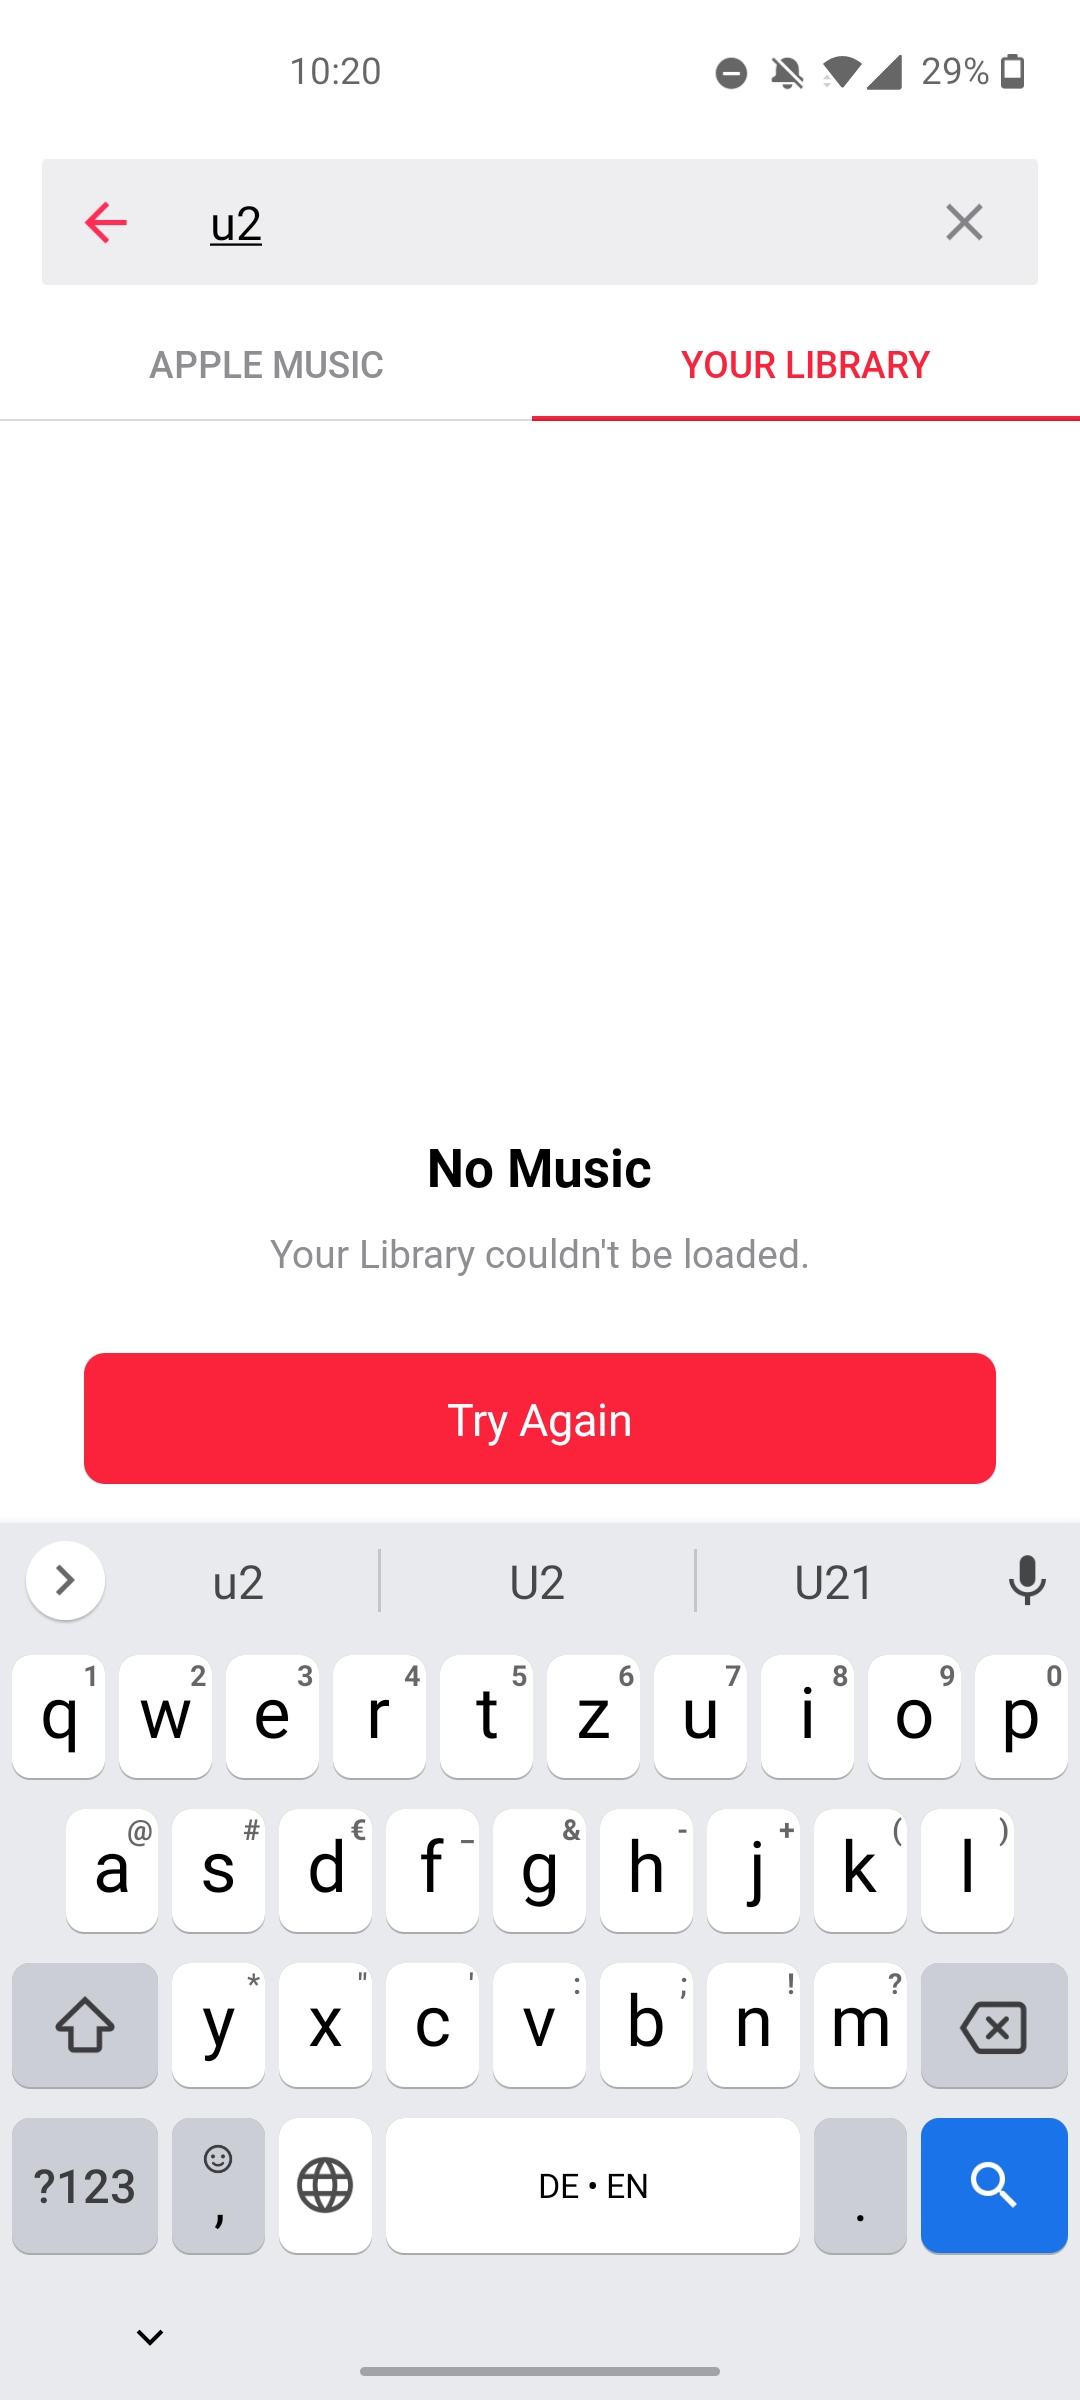 musi app that looks like dropbox